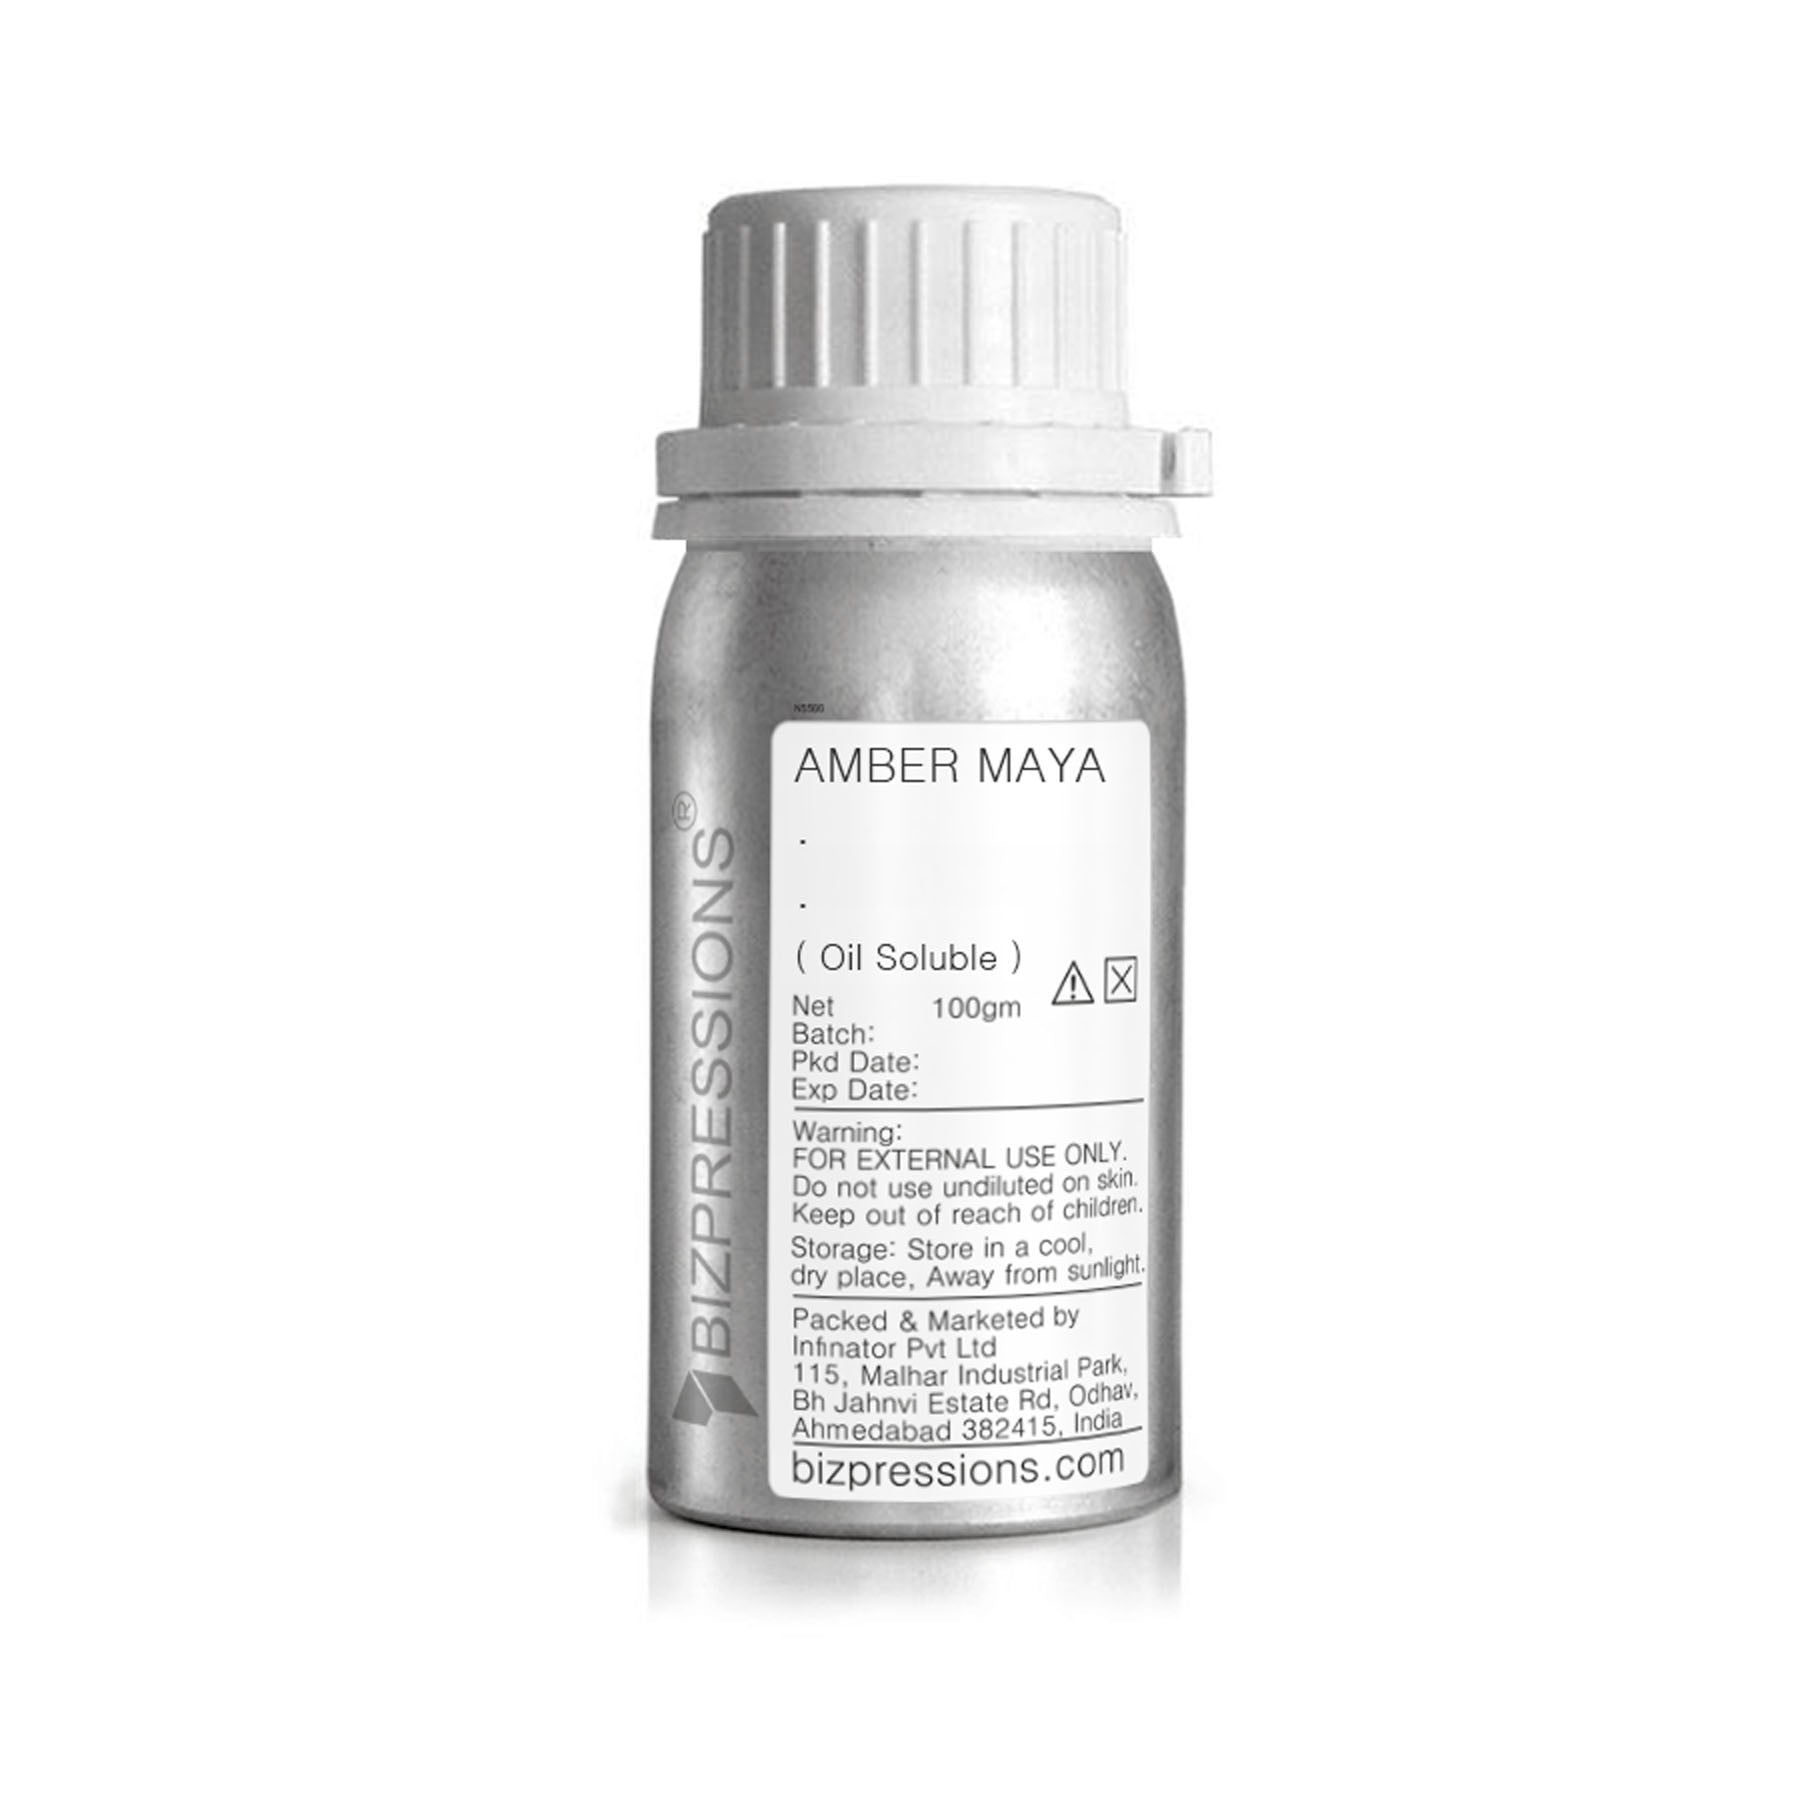 AMBER MAYA - Fragrance ( Oil Soluble ) - 100 gm